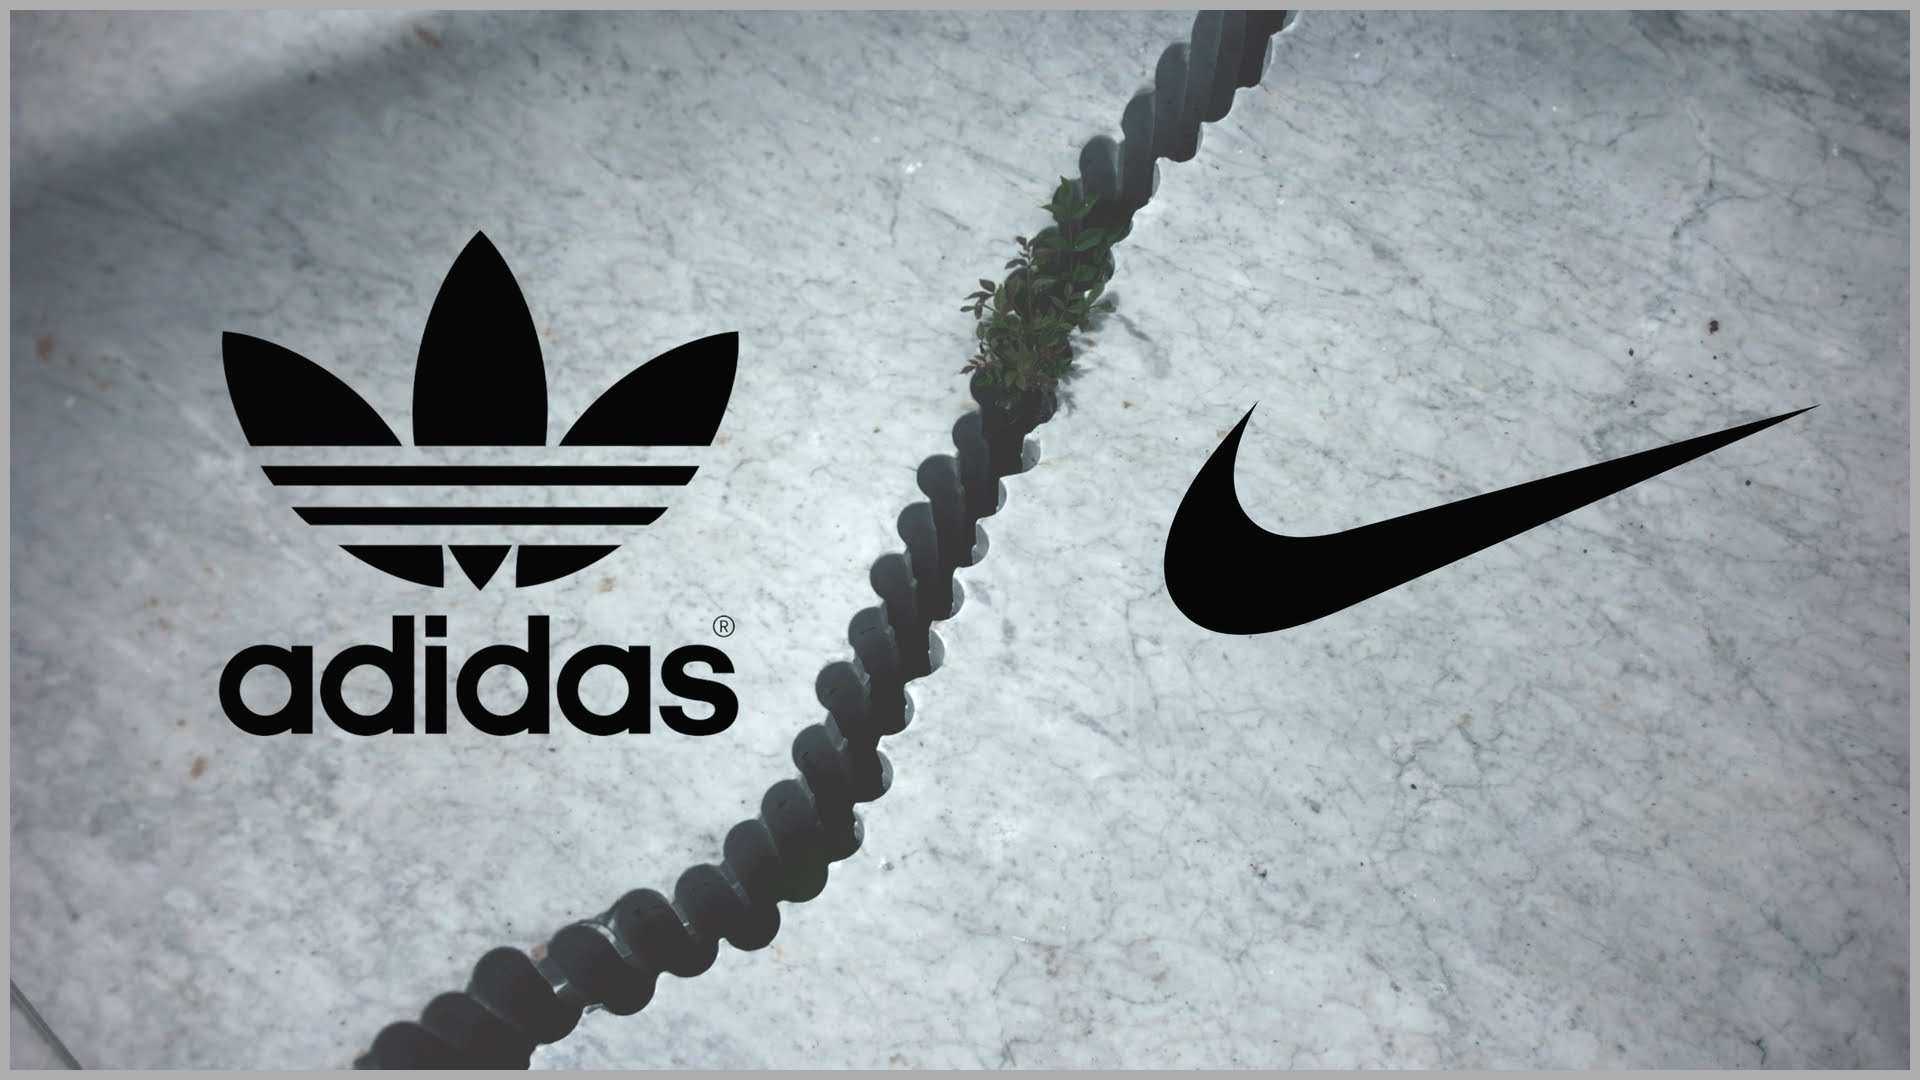 Adidas Nike Wallpapers - Top Free 